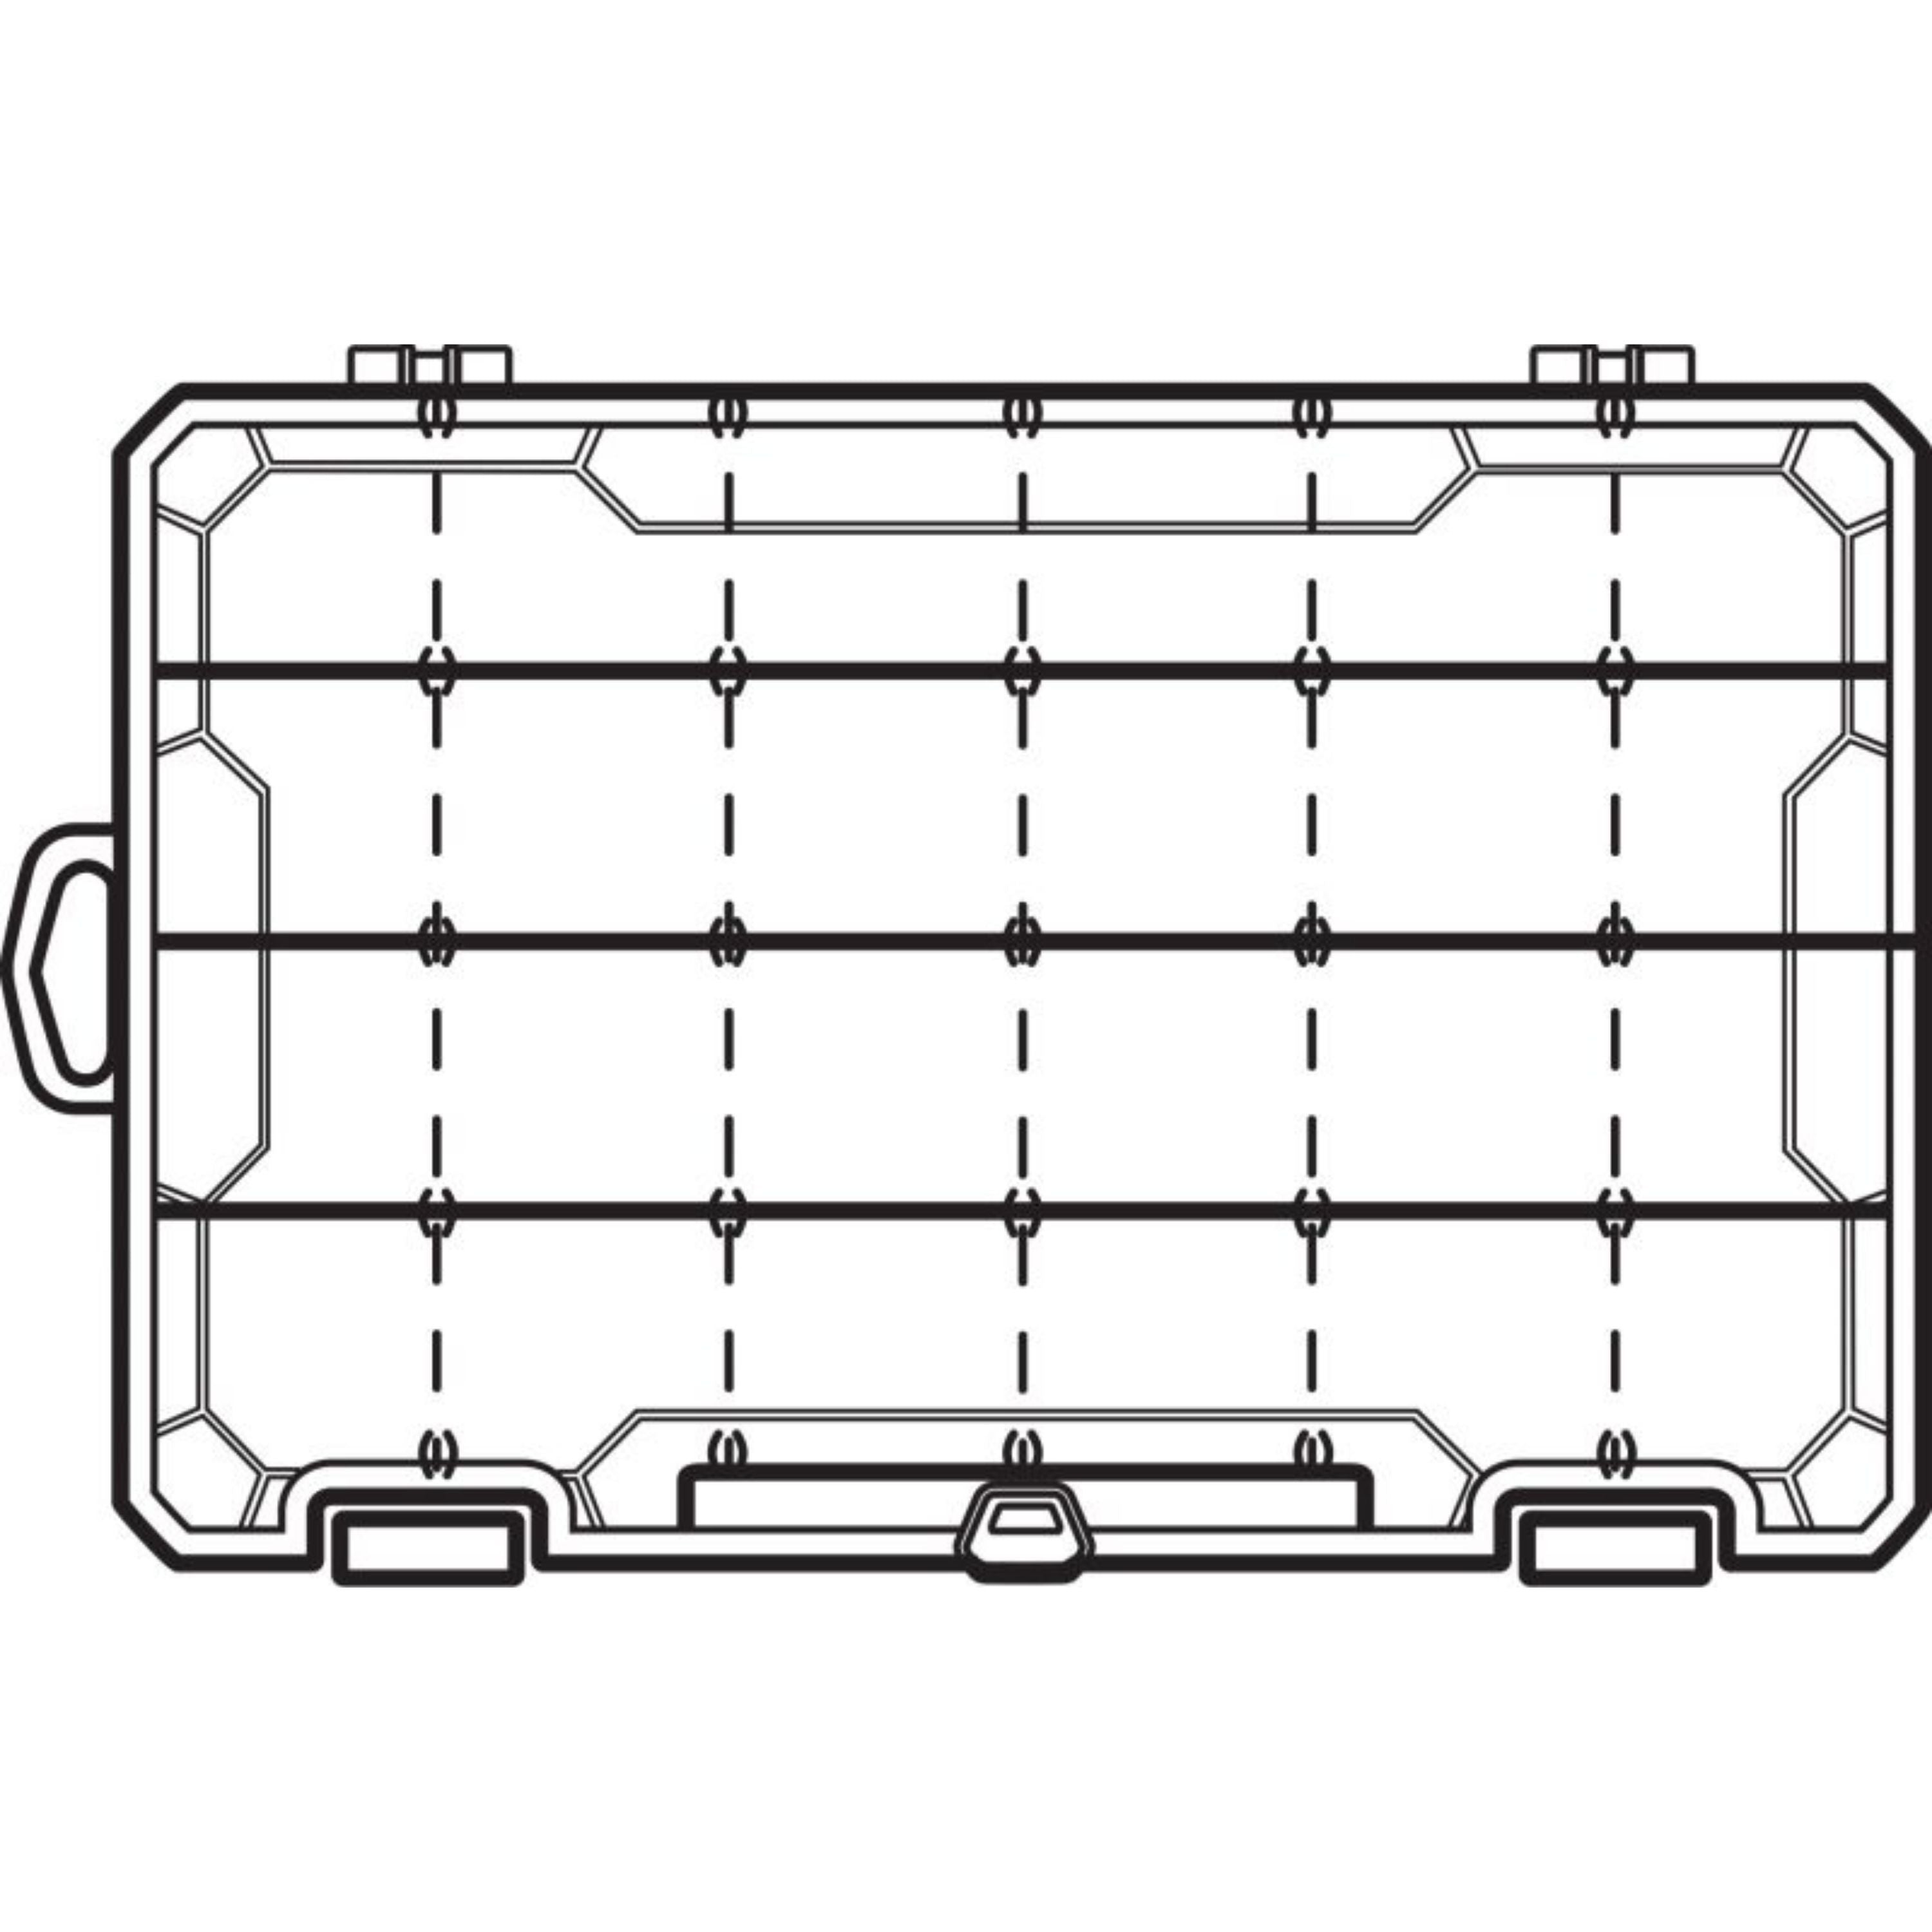 Utility Box - 24 compartments